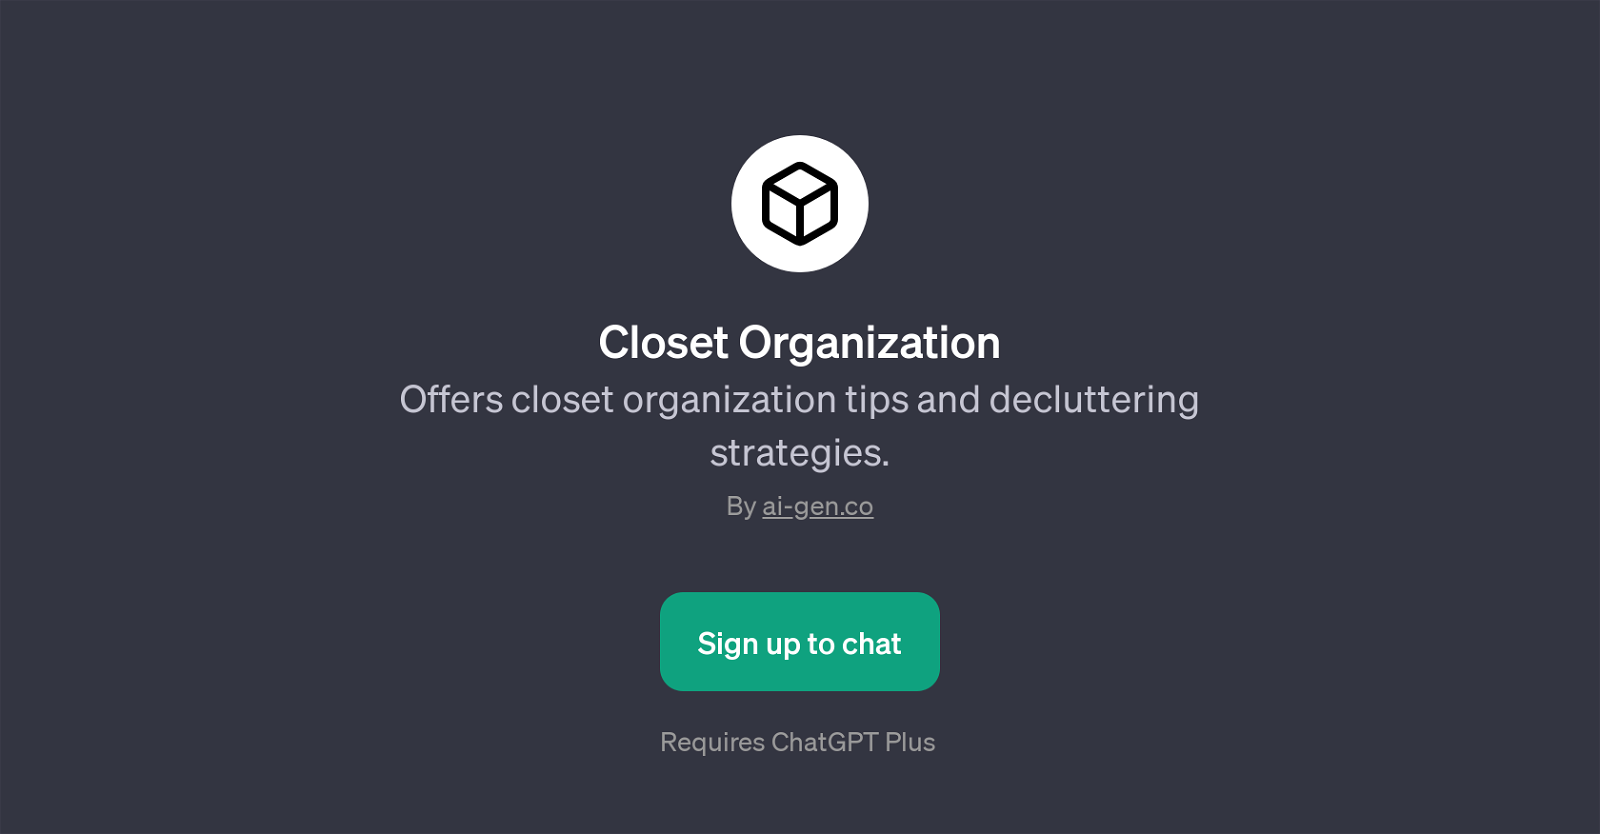 Closet Organization website